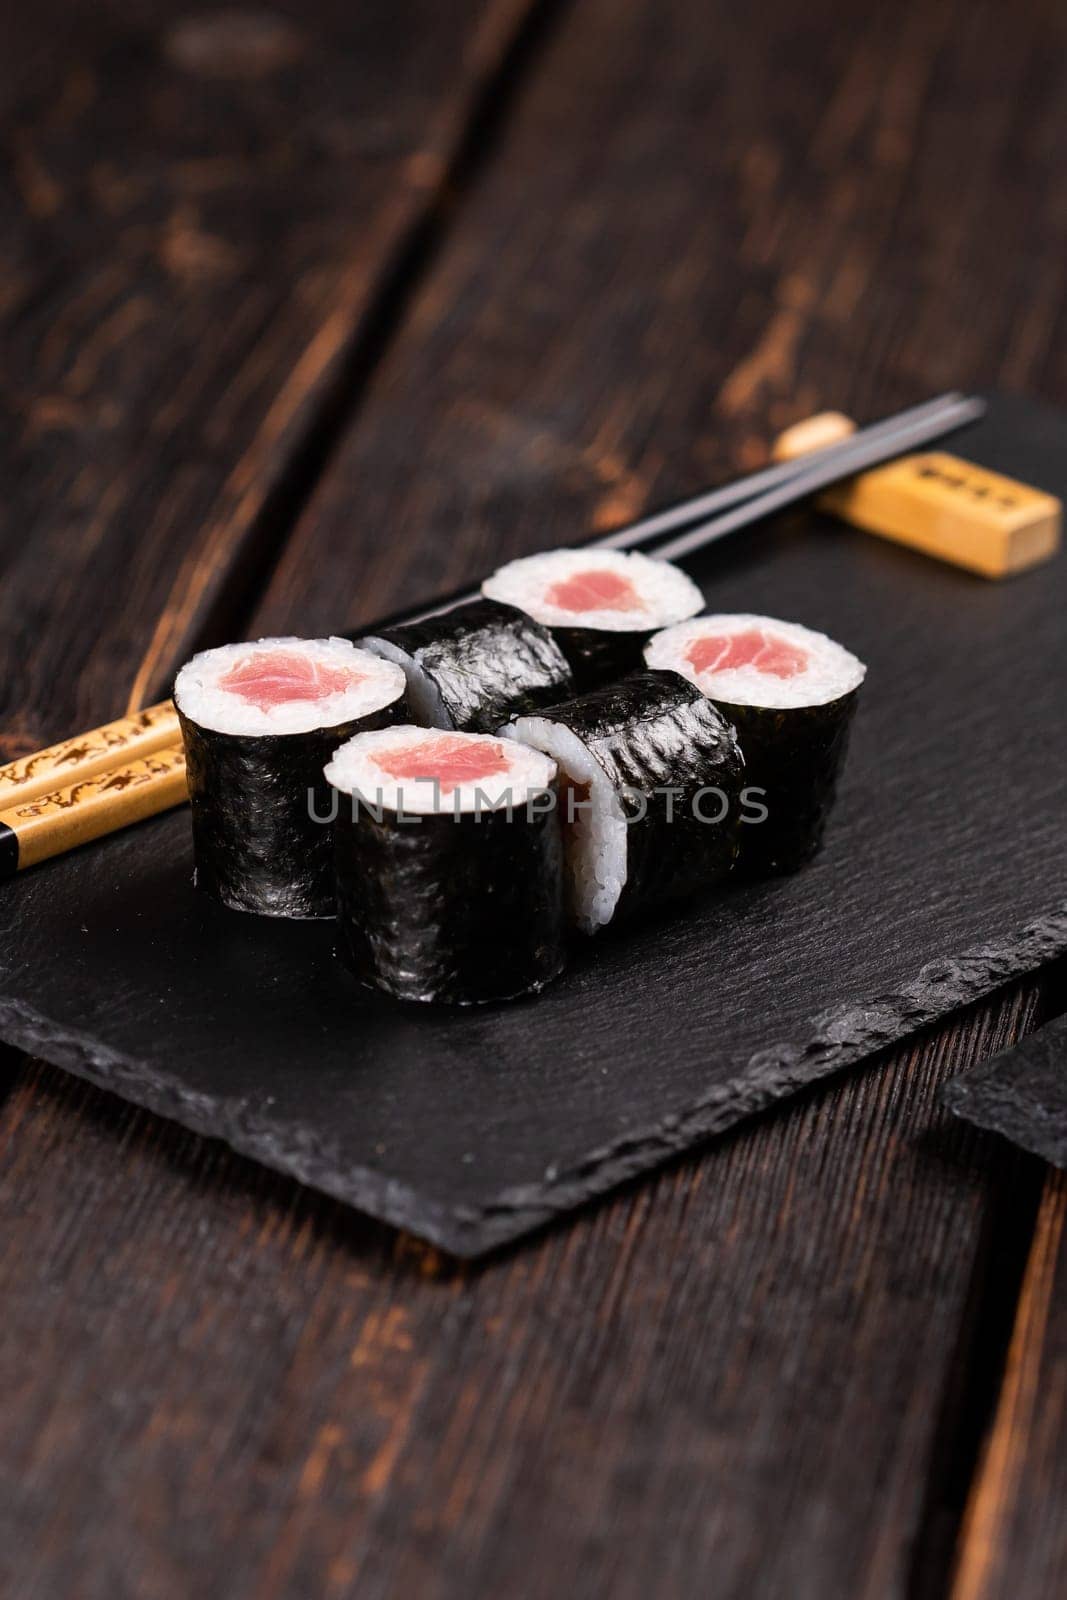 Maki sushi rolls with raw tuna - Sushi menu. Japanese food concept by Satura86